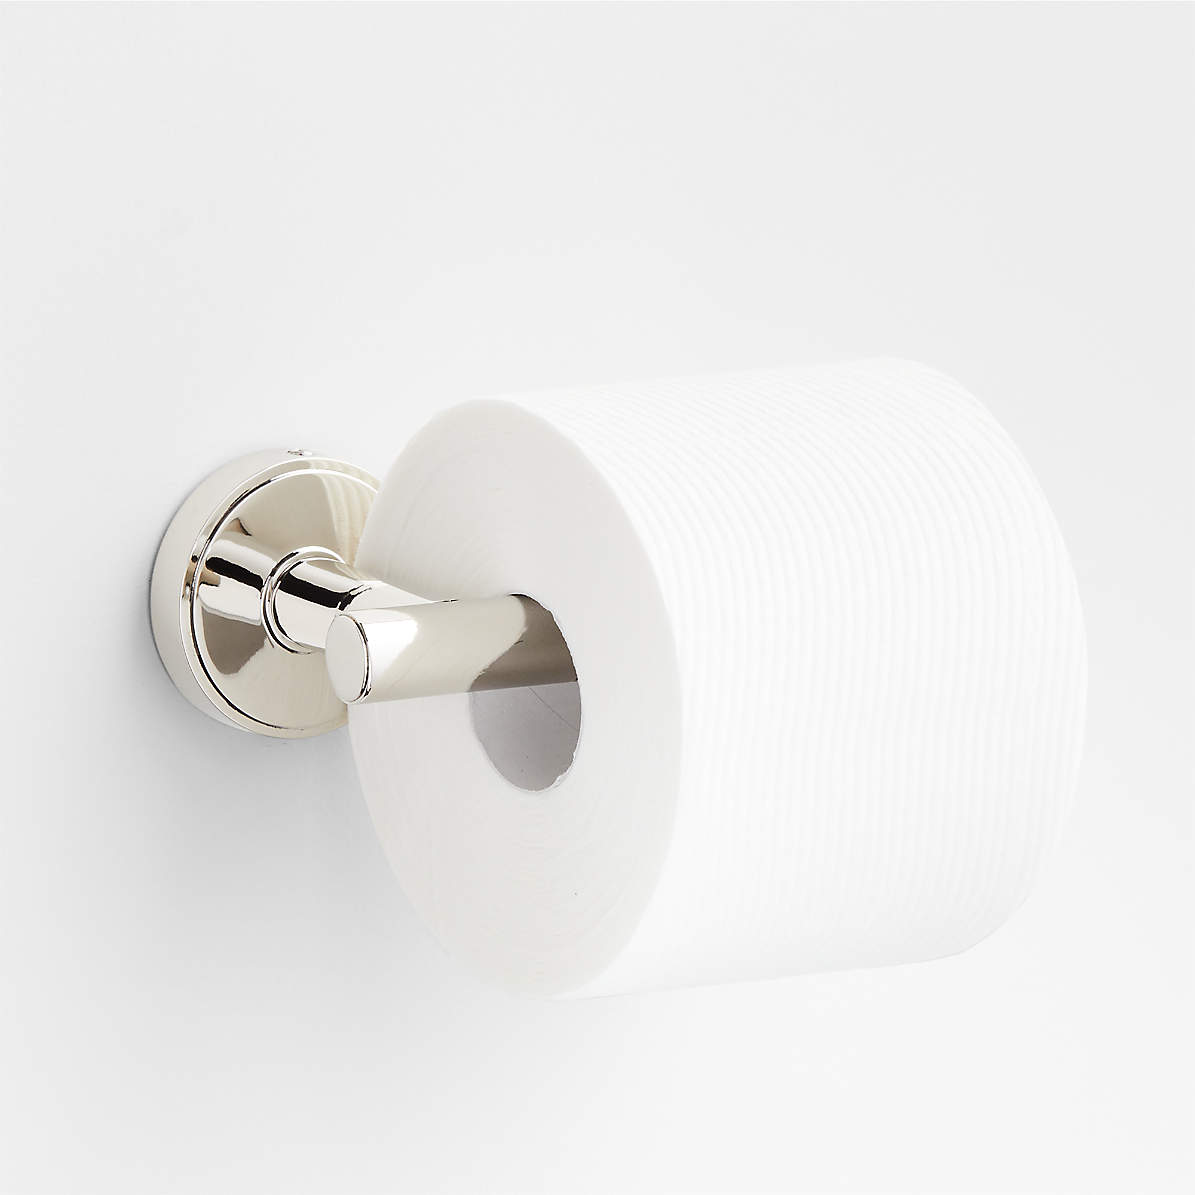 Home Basics Toilet Paper Organizer Satin Nickel